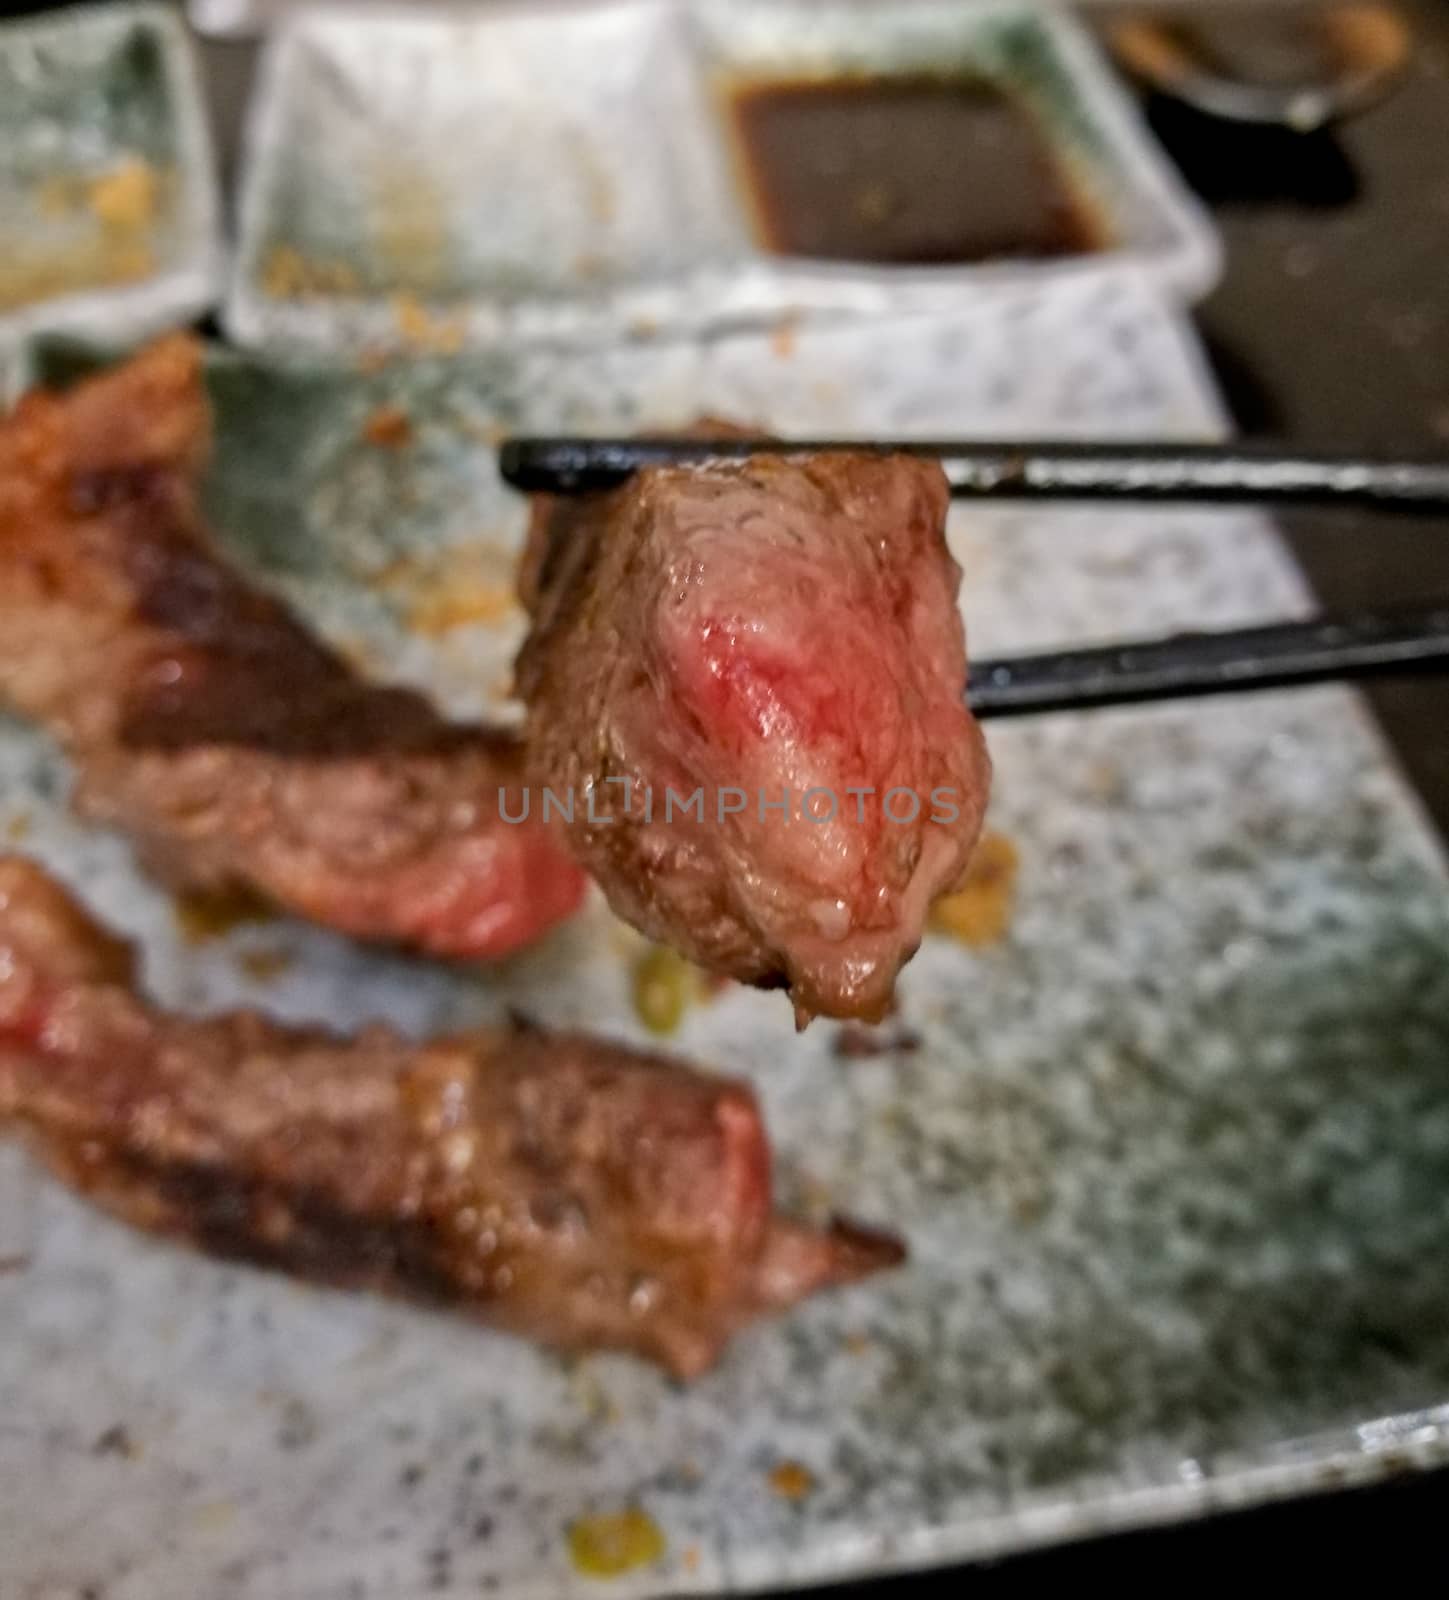 Superb legendary Wagyu beef grilled medium rare with chopsticks by eyeofpaul